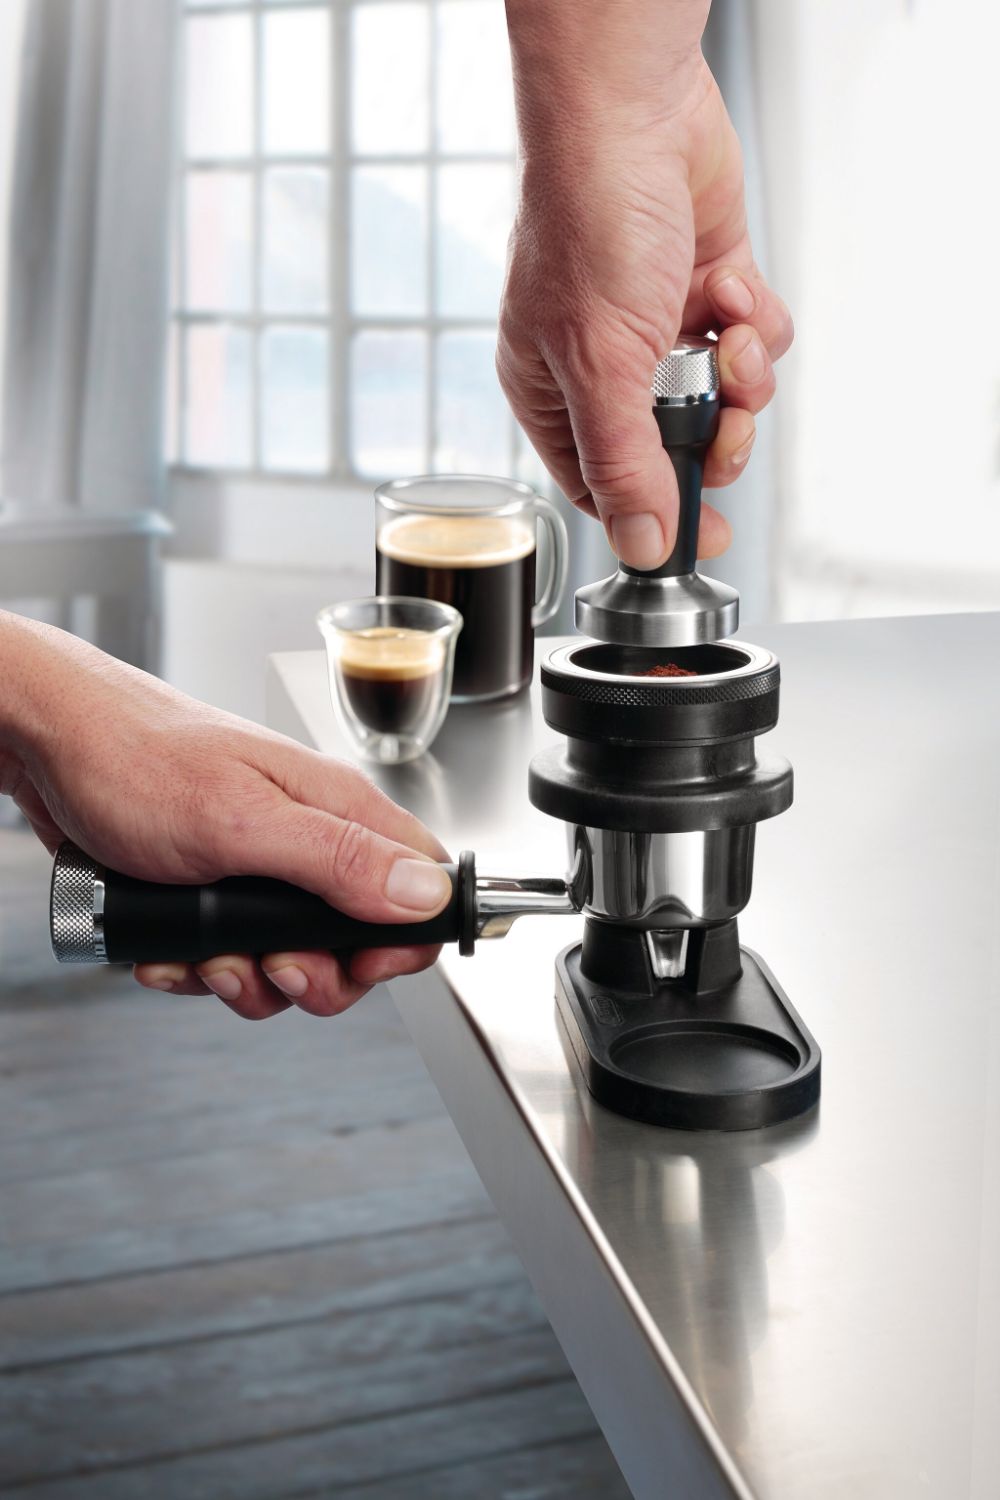 De'Longhi De'Longhi La Specialista Arte Espresso Coffee Machine